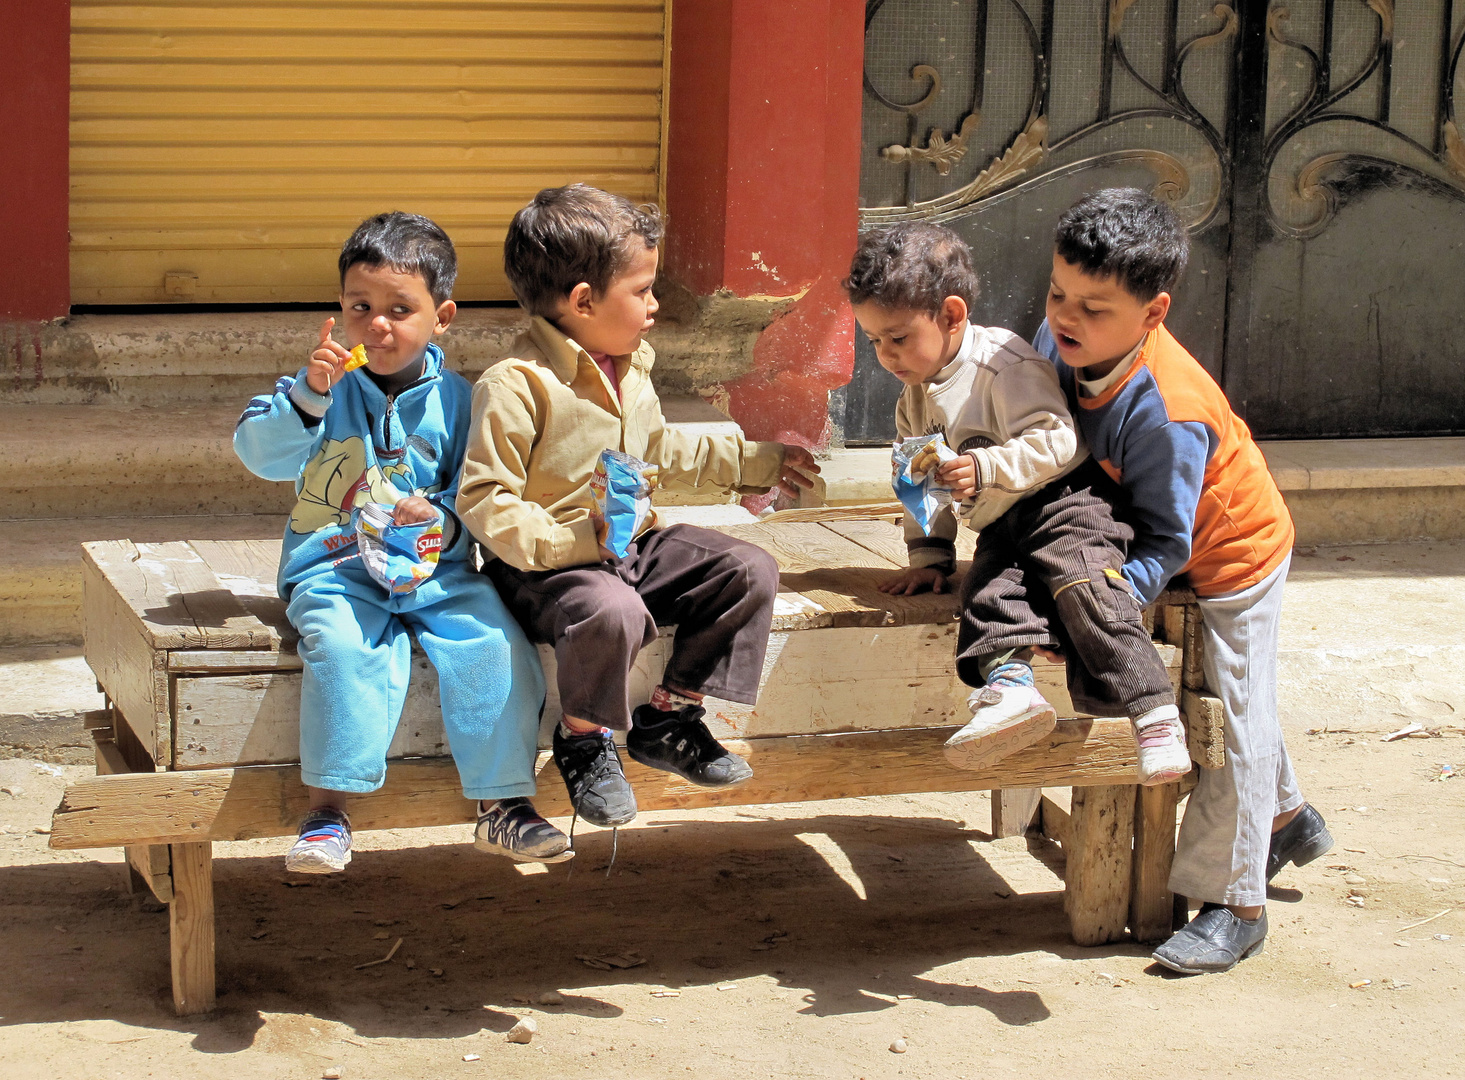 Kinder in Ägypten